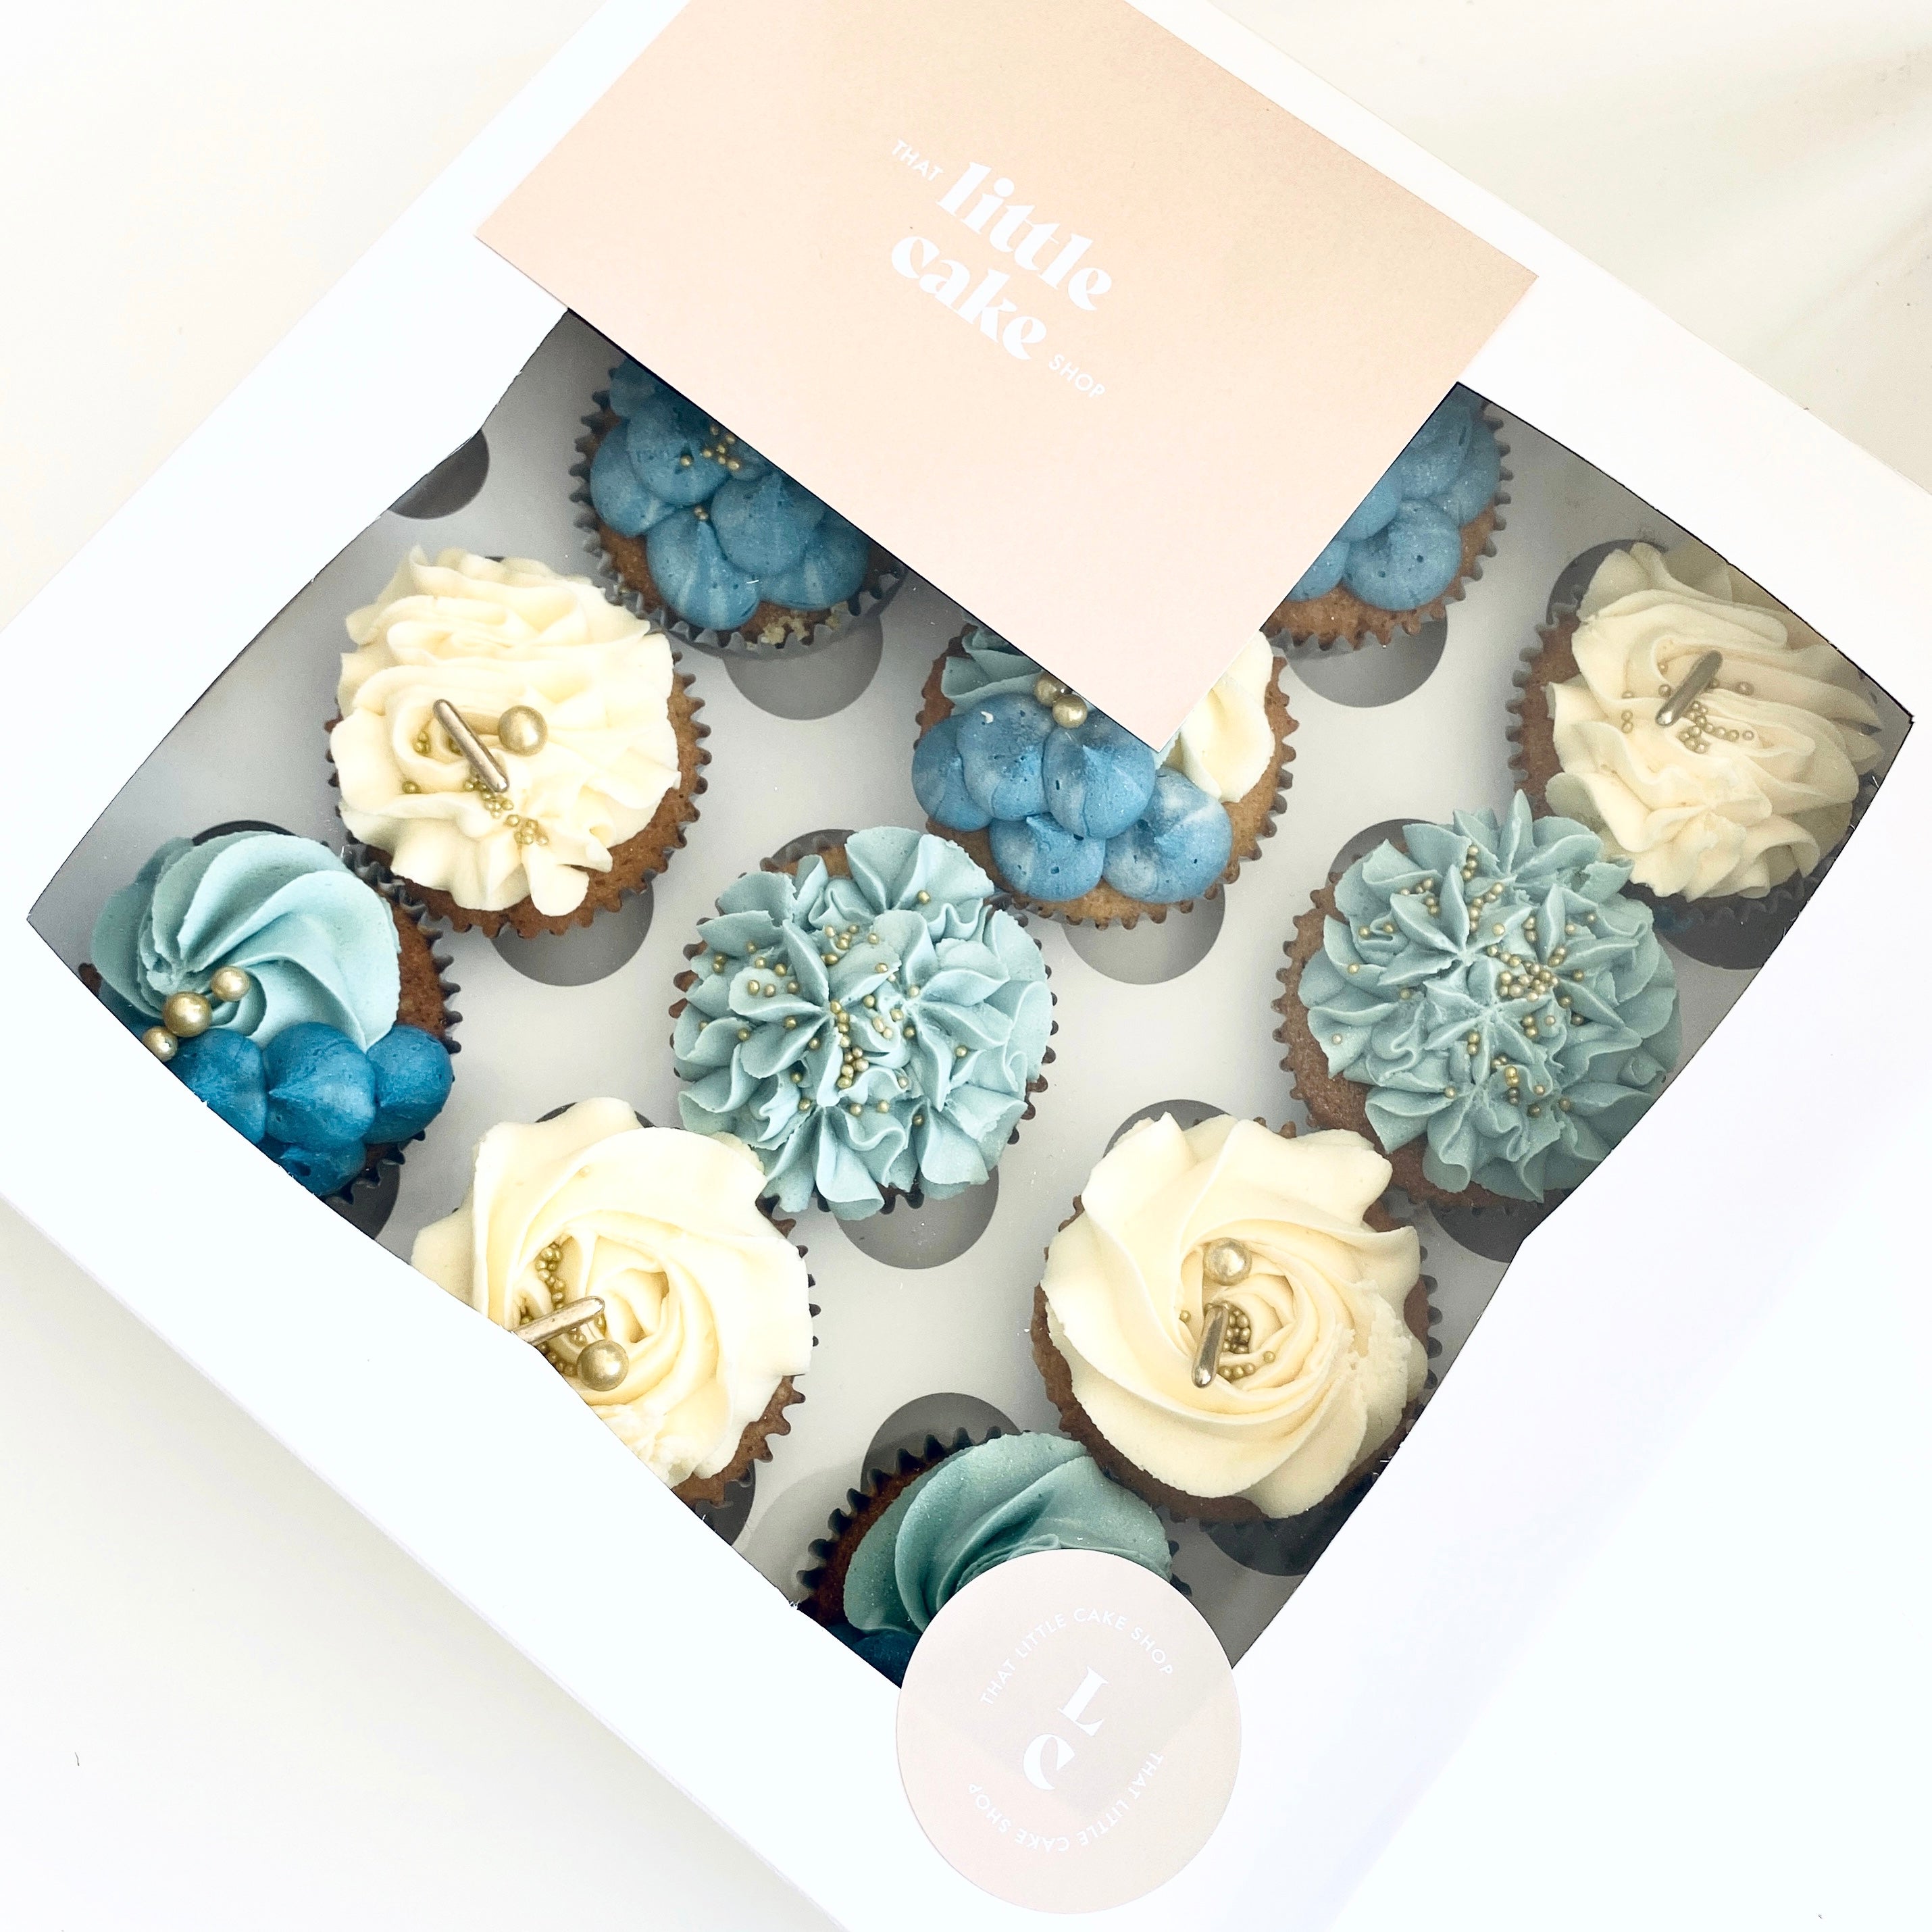 Blue Floral Cupcakes